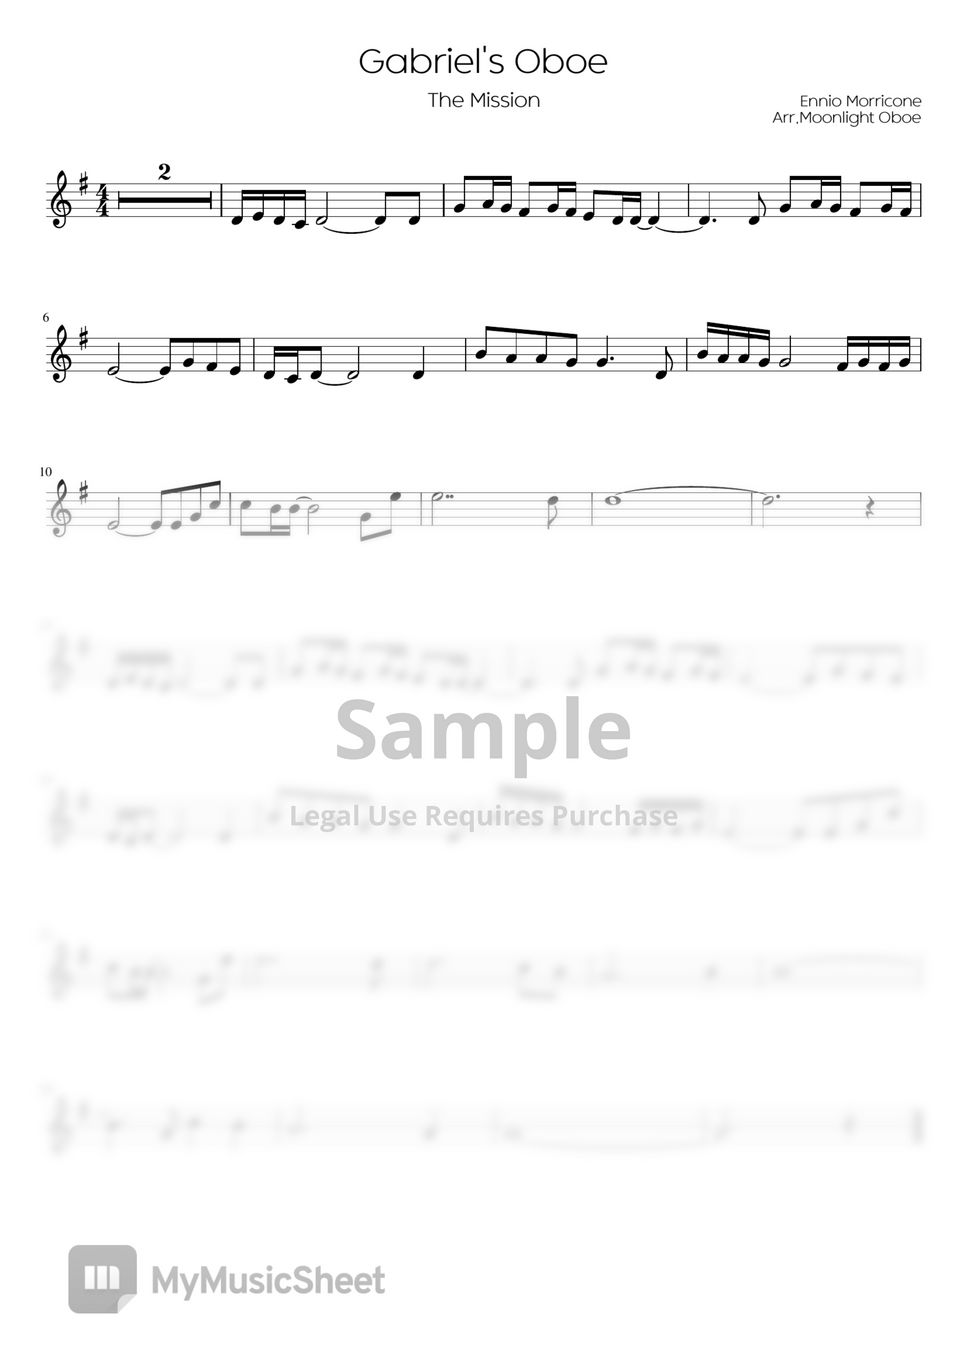 Ennio Morricone - Gabriel's Oboe (Lower Key) (G Major (Lower Key)) by Moonlight Oboe